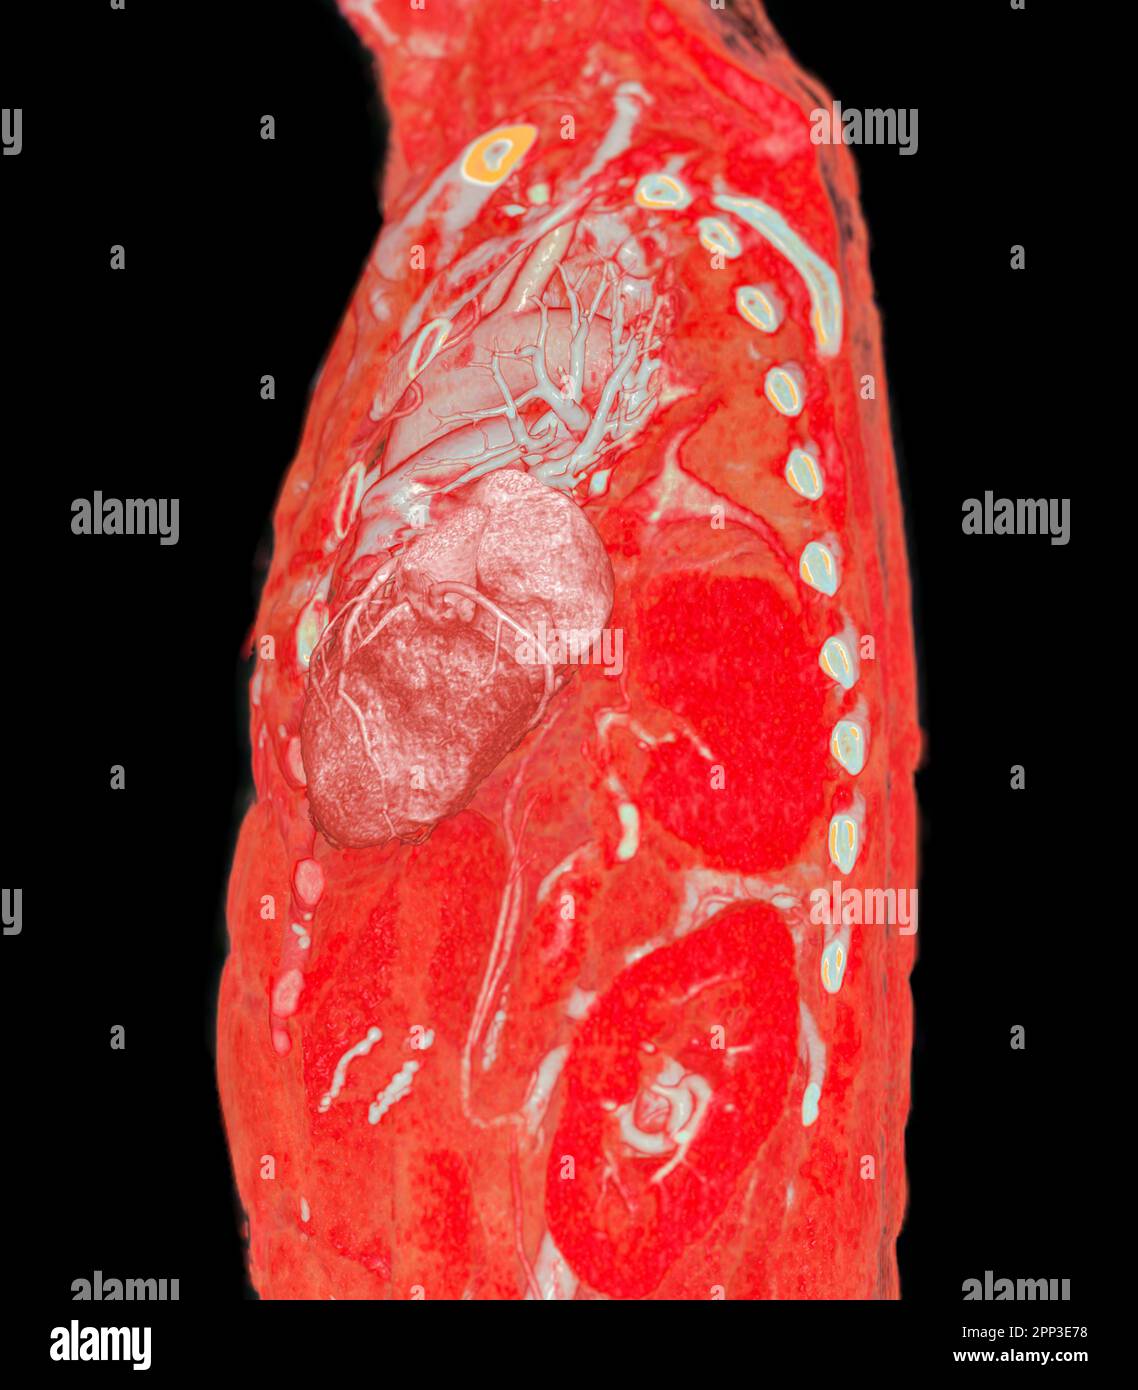 CTA-Pulmonalarterien 3D, Darstellung des Astes der Pulmonalarterie Stockfoto